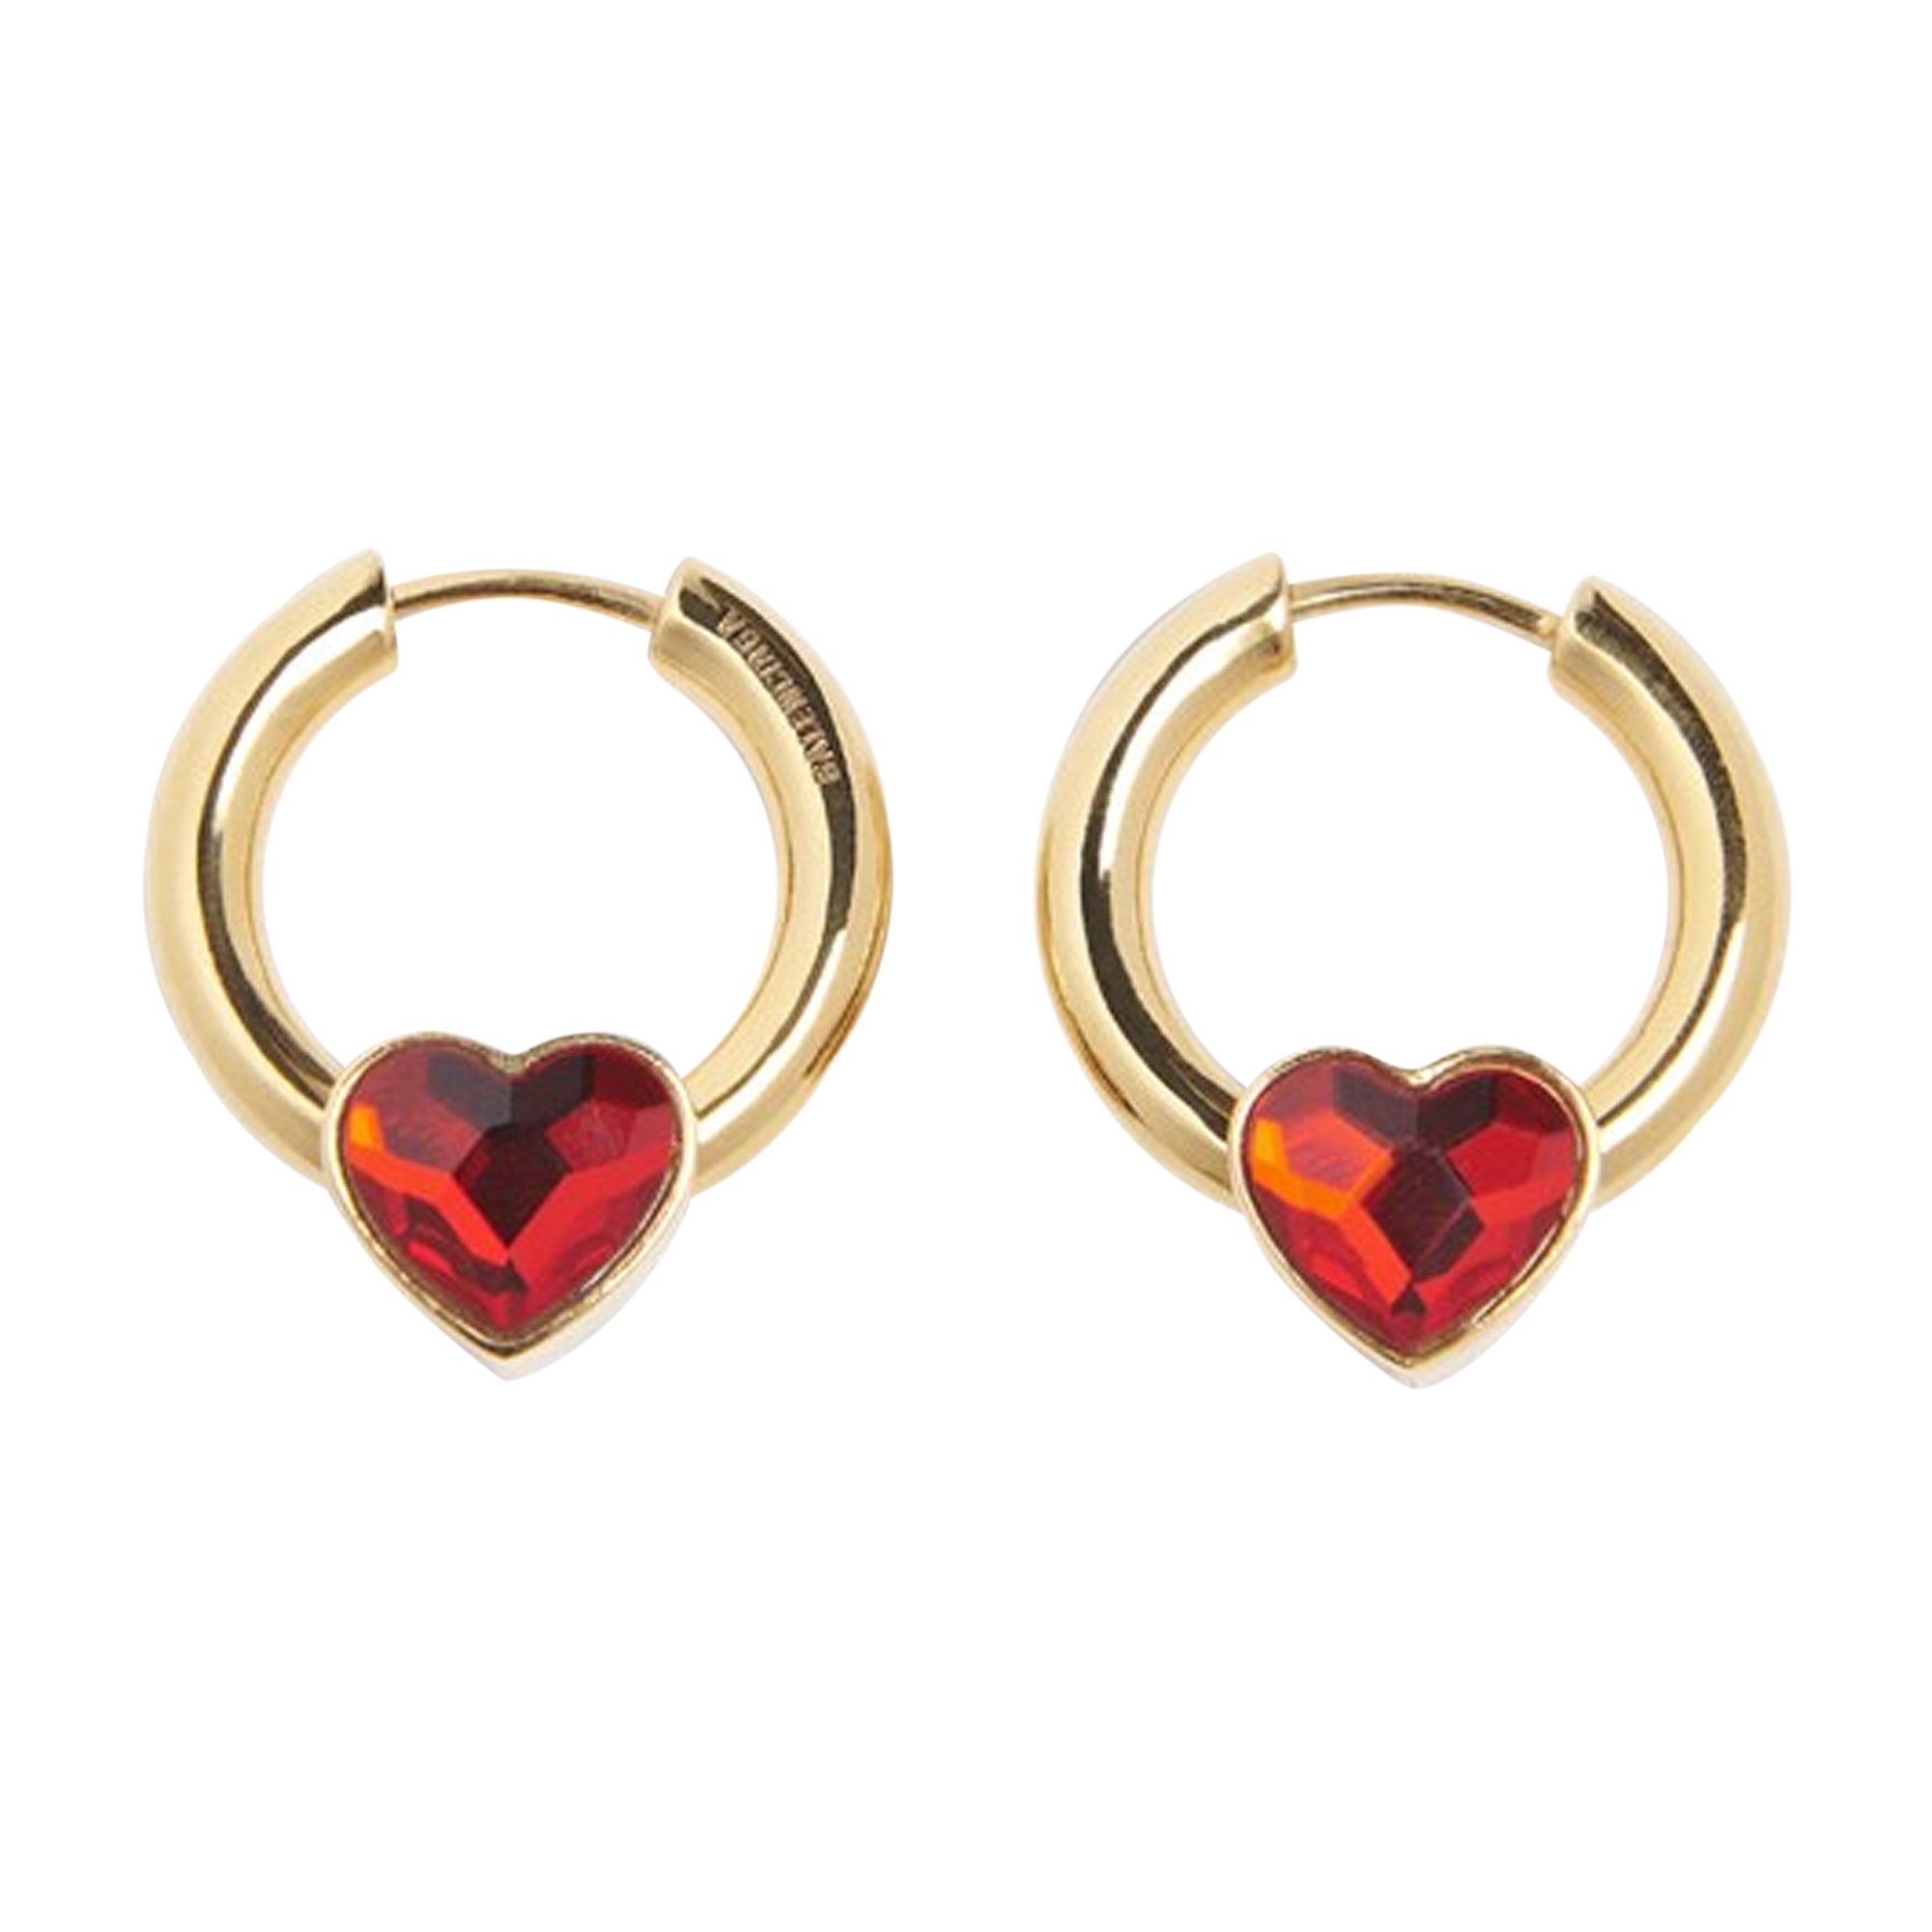 Buy Balenciaga Force Heart Earrings 'Shiny Gold/Red' - 644531 